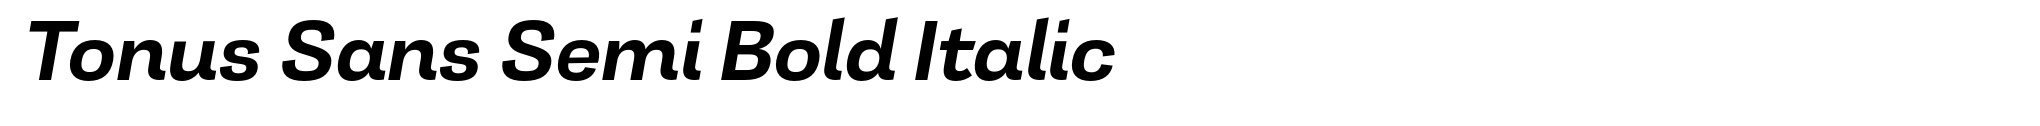 Tonus Sans Semi Bold Italic image